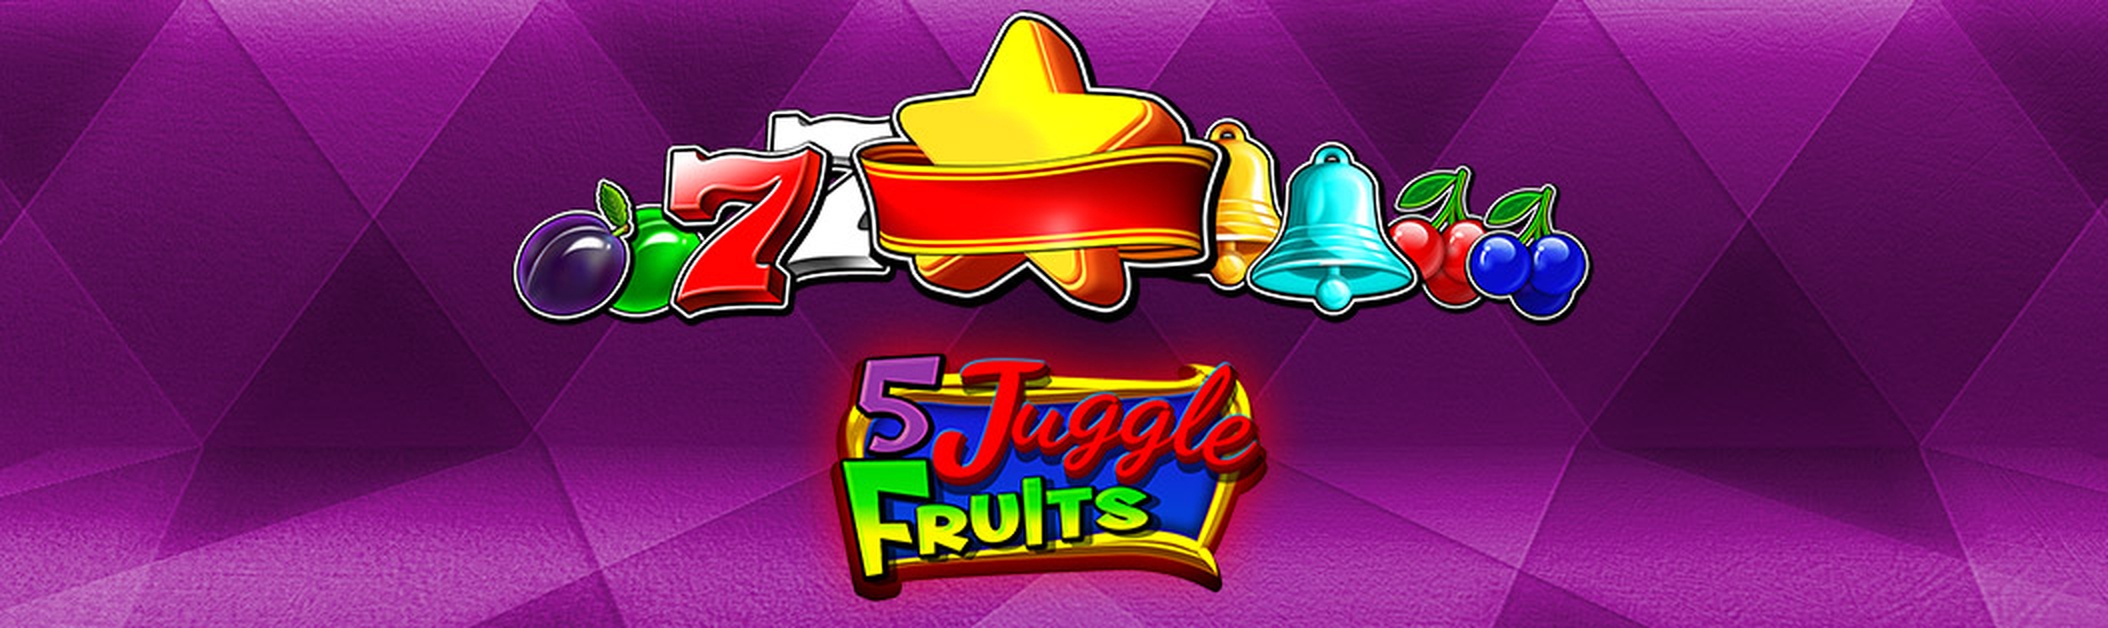 5 Juggle Fruits demo